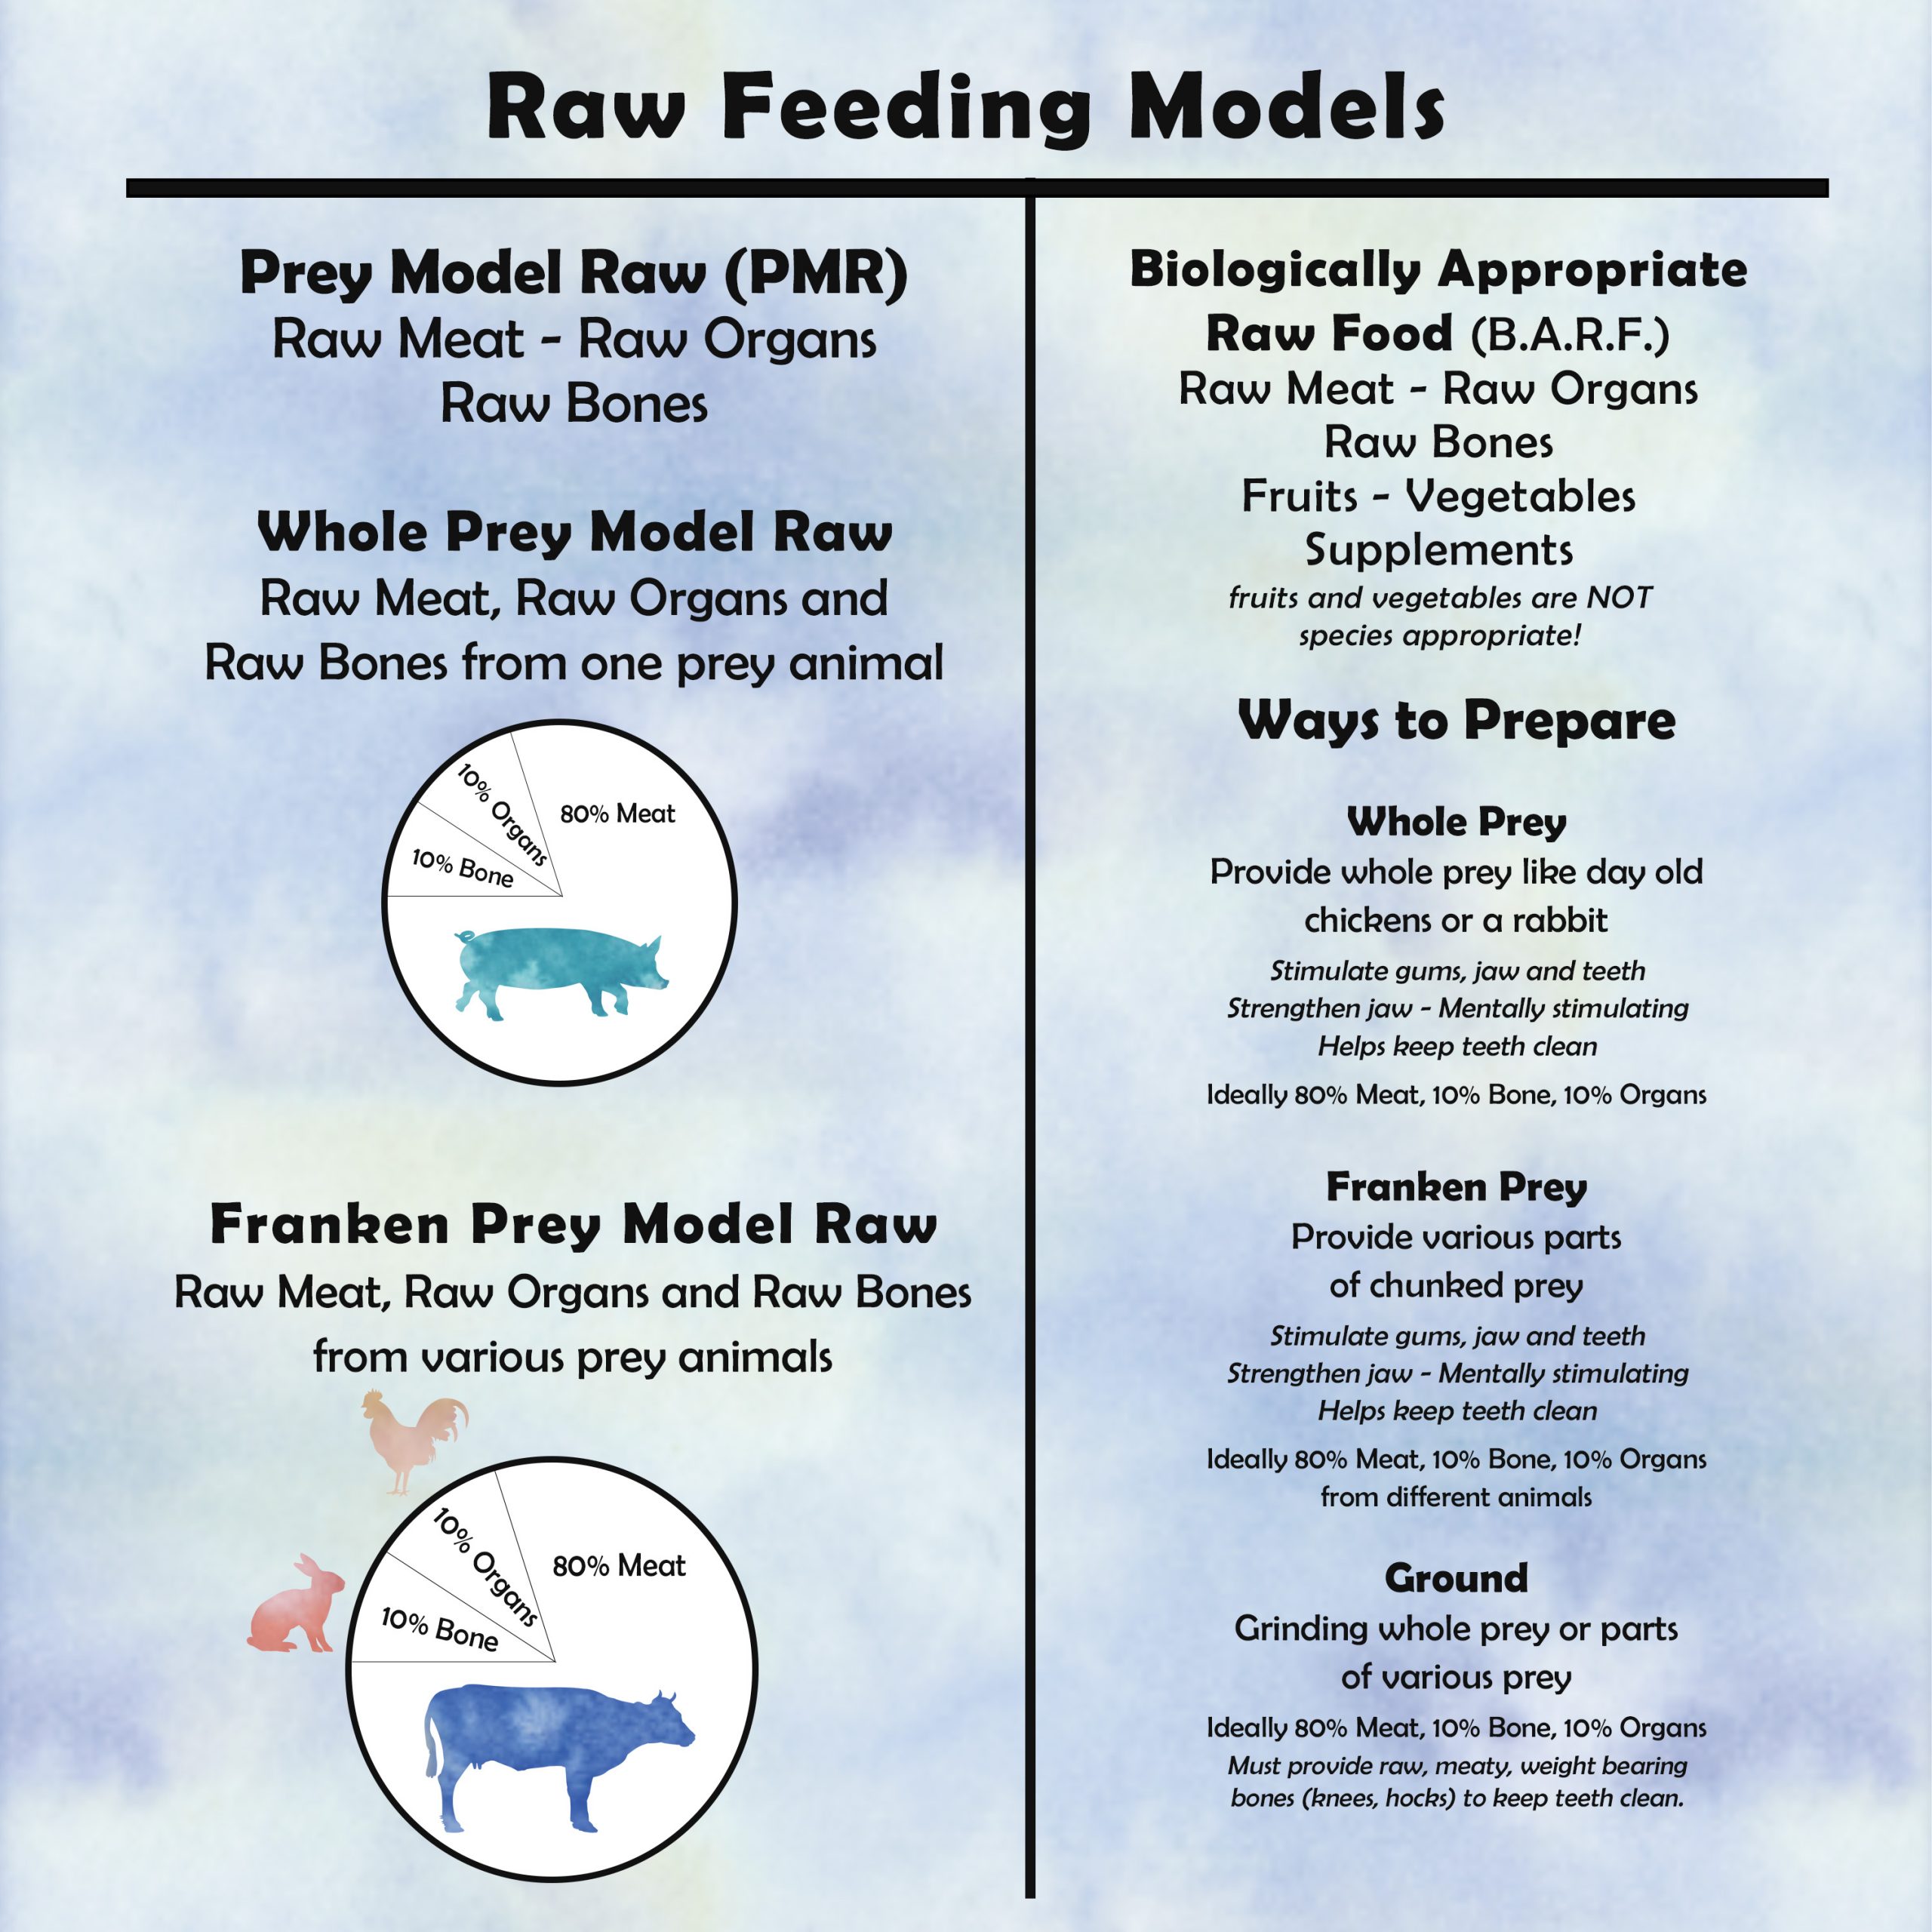 raw feeding models how to prepare